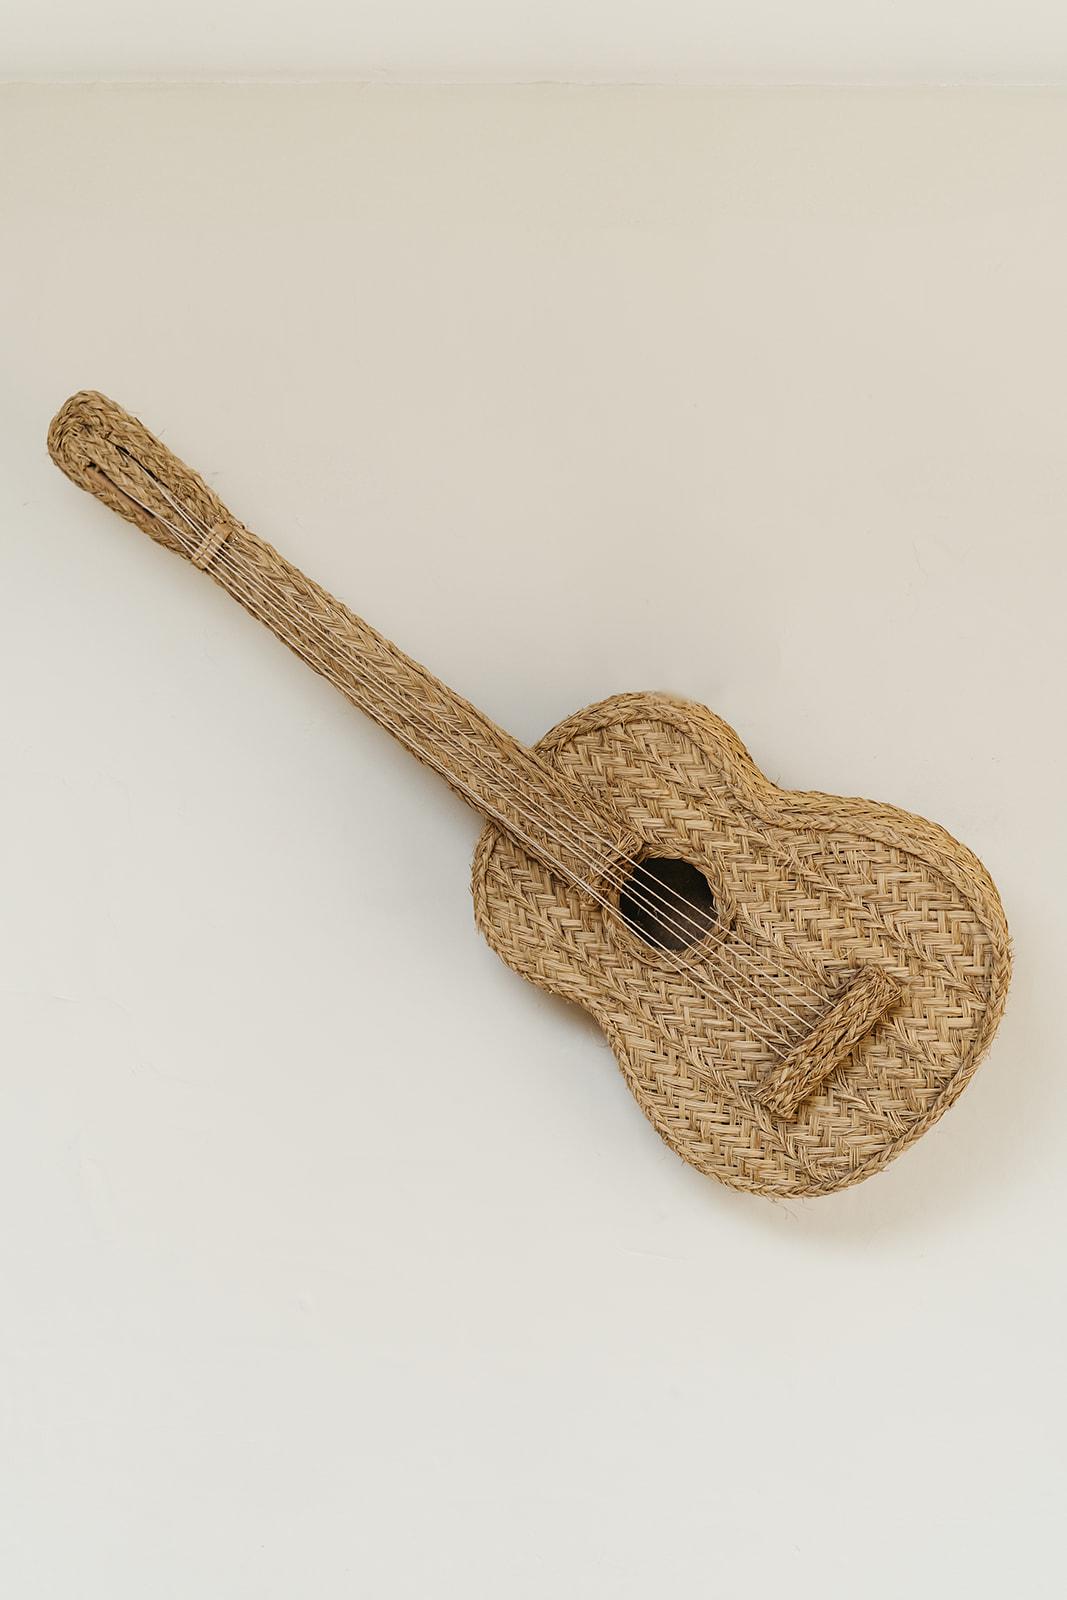 Spanish contemporary wicker guitar ...  For Sale